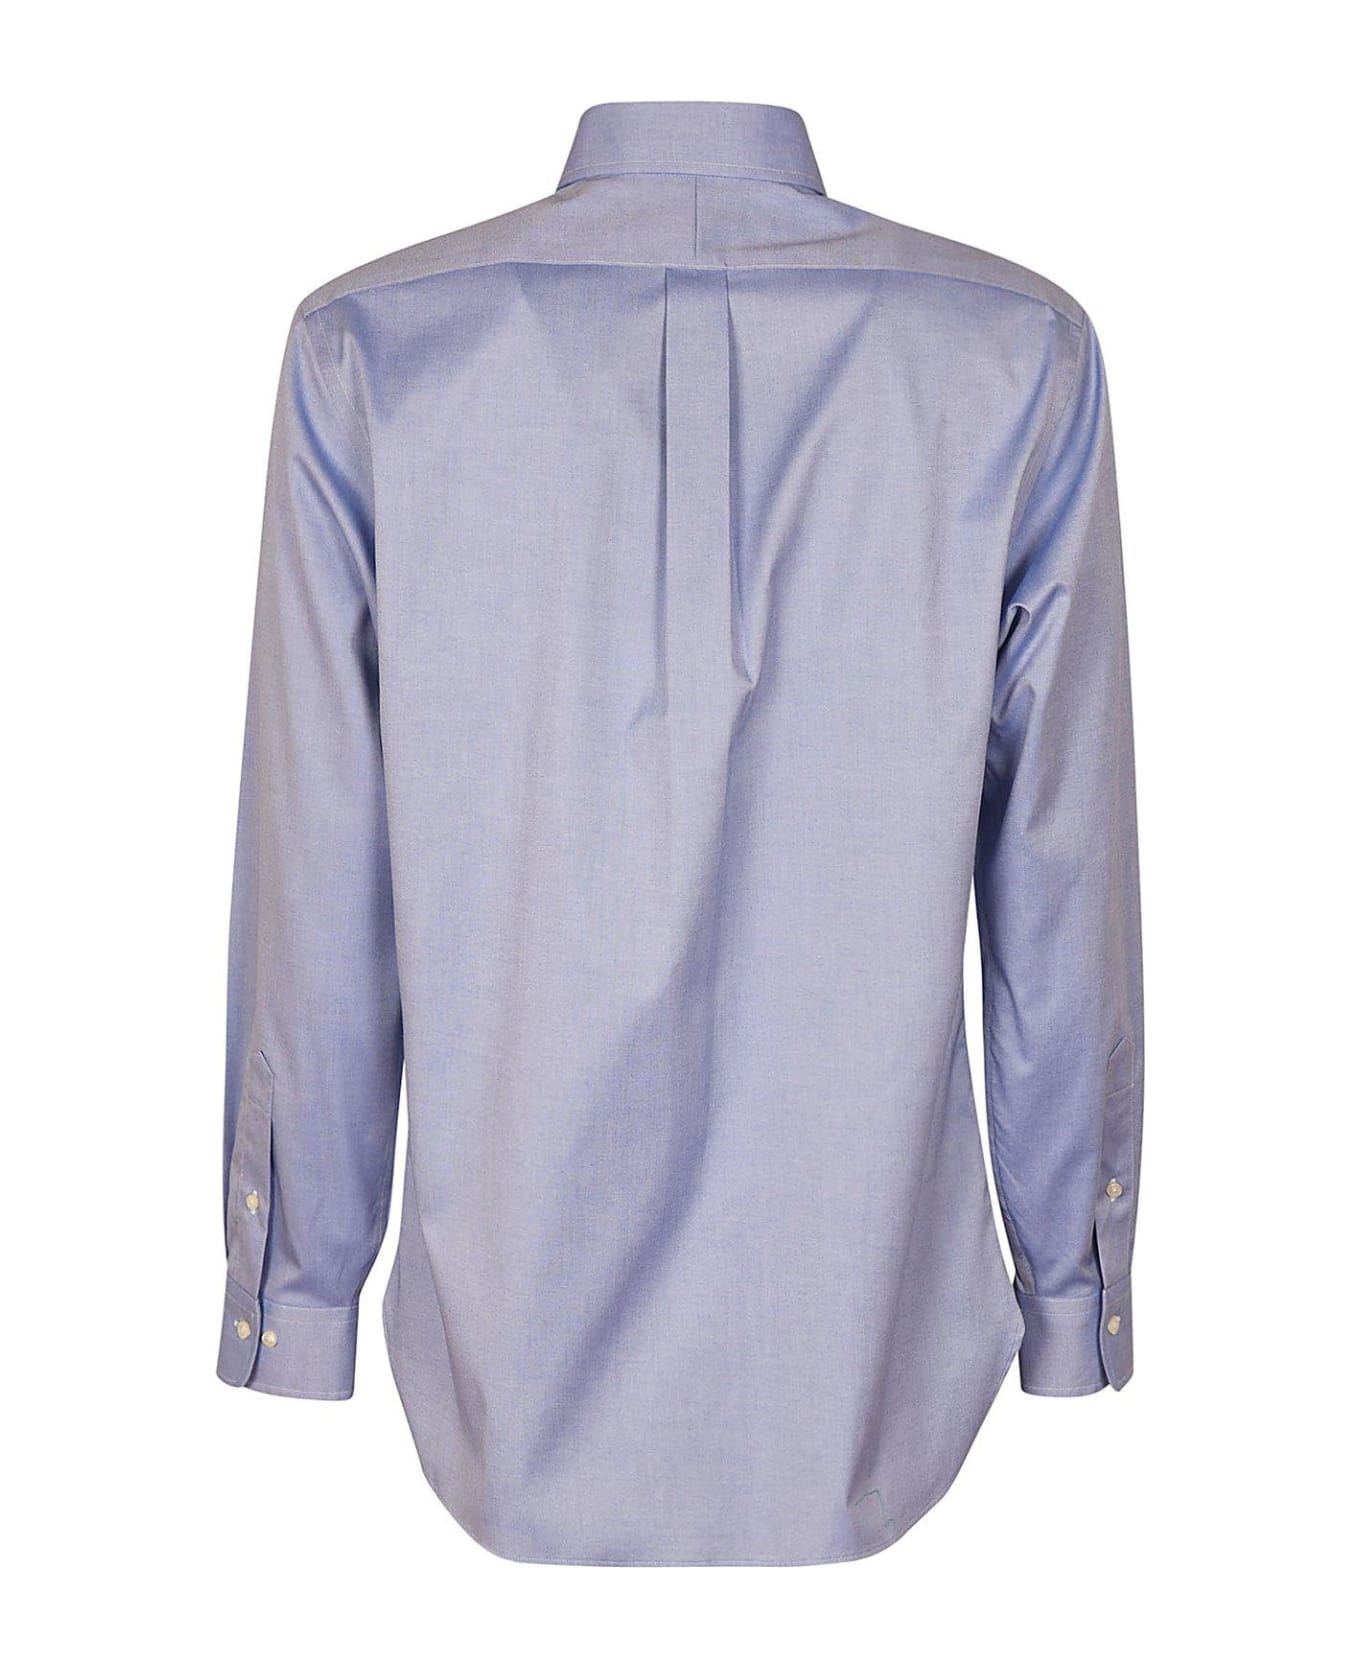 Ralph Lauren Logo Embroidered Shirt - True Blue White